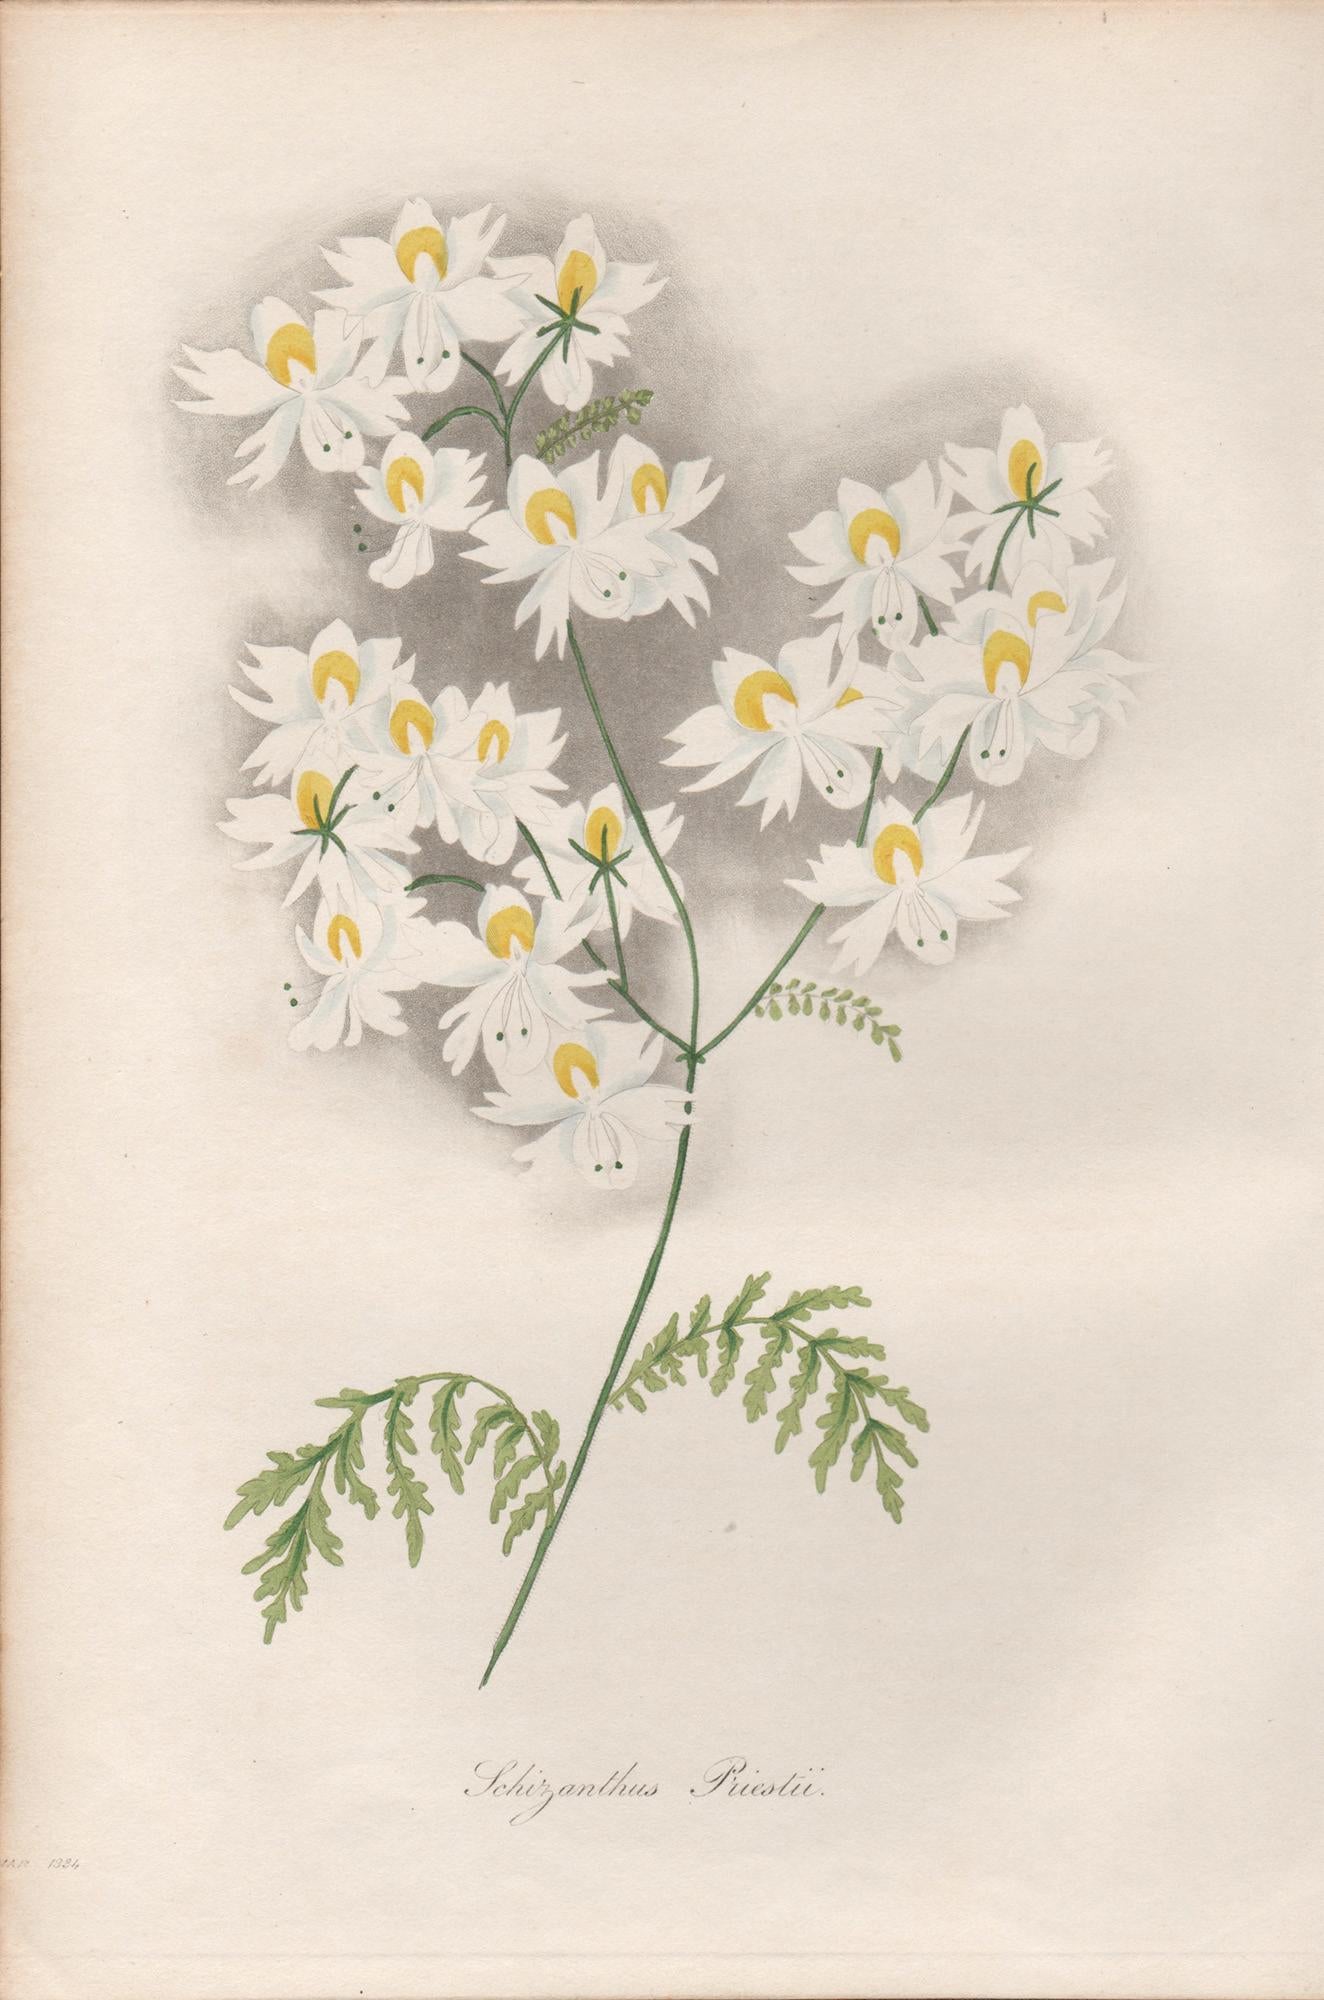 Frederick William Smith Print - Schizanthus Priestii, antique botanical white flower engraving